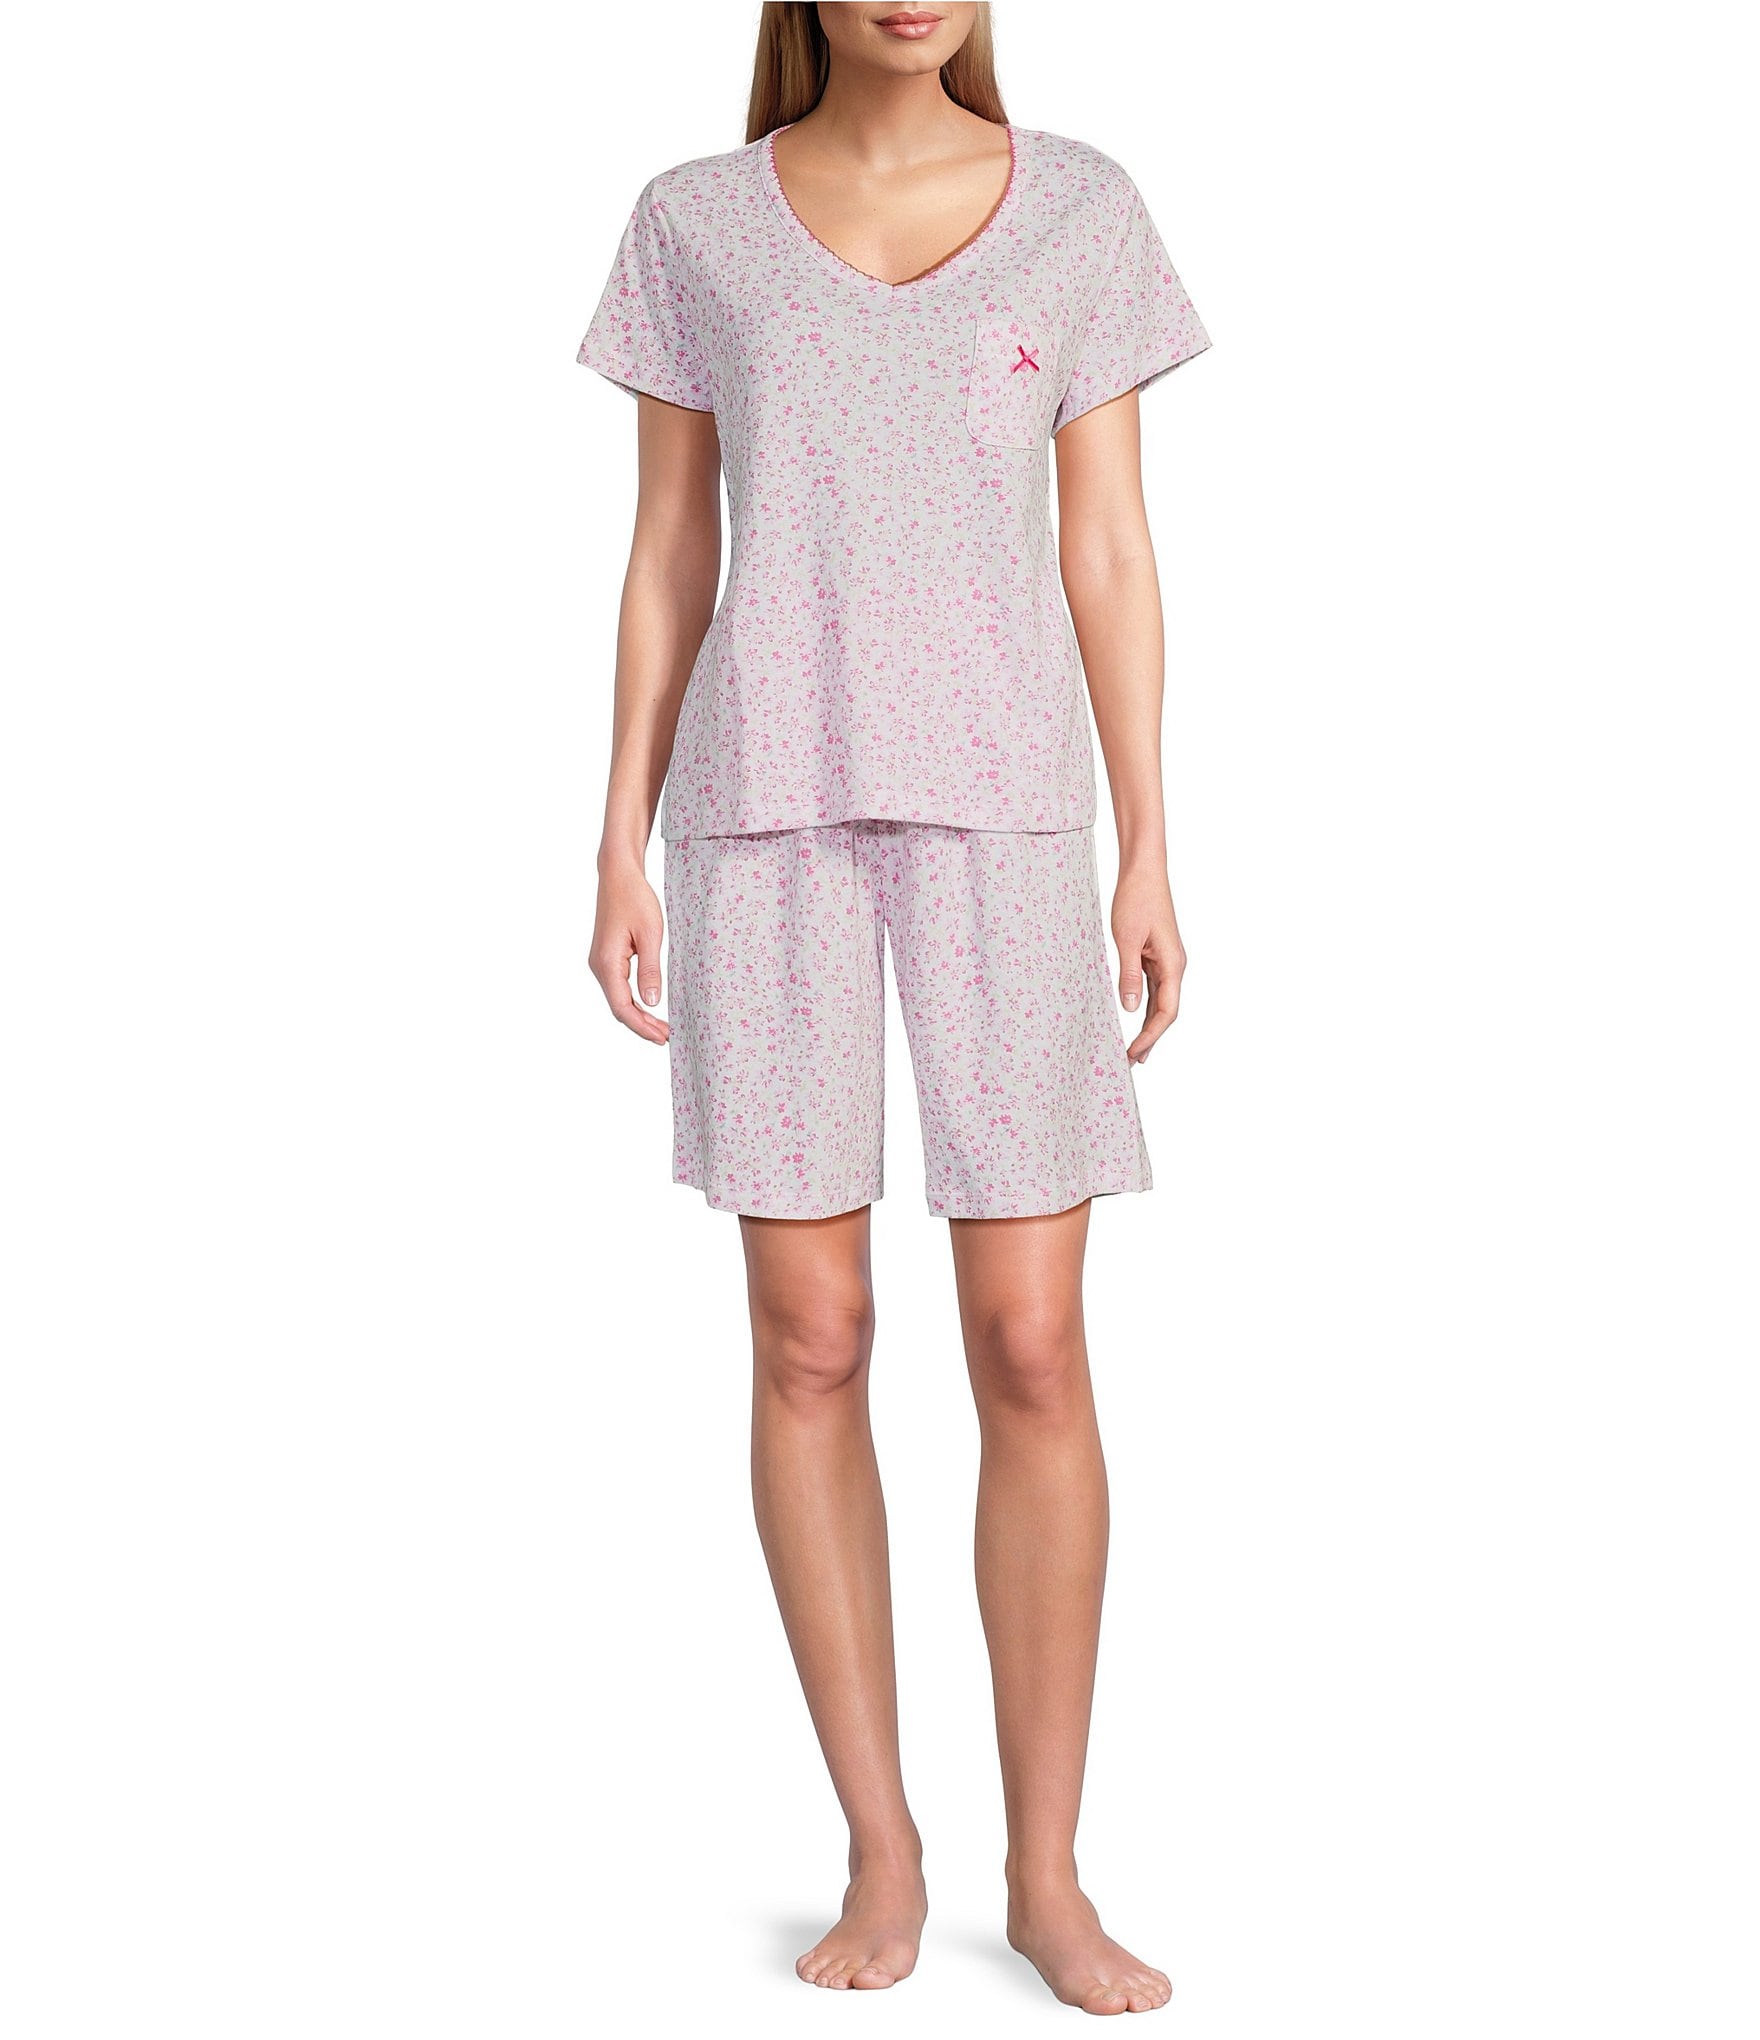 Karen Neuburger Womens Nightshirts & Gowns in Womens Pajamas